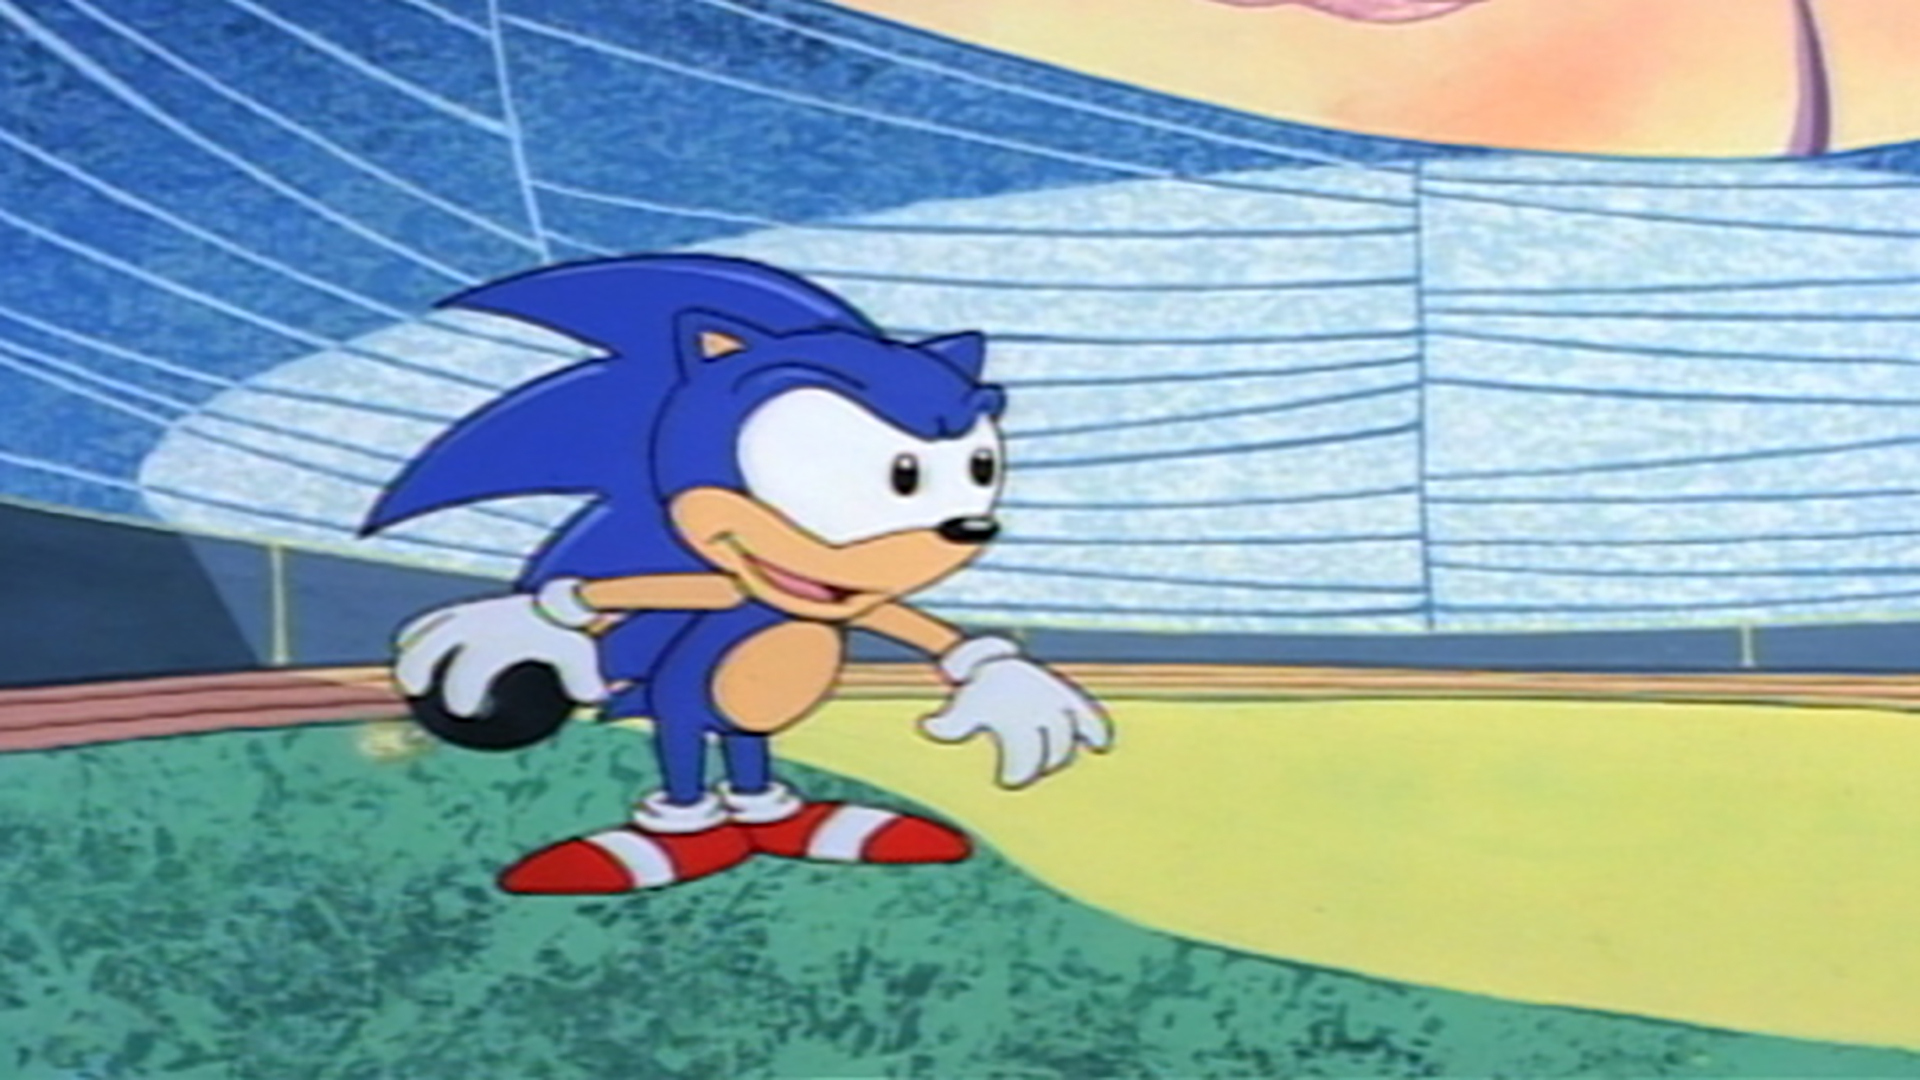 Sonic the Hedgehog Season 1 - watch episodes streaming online